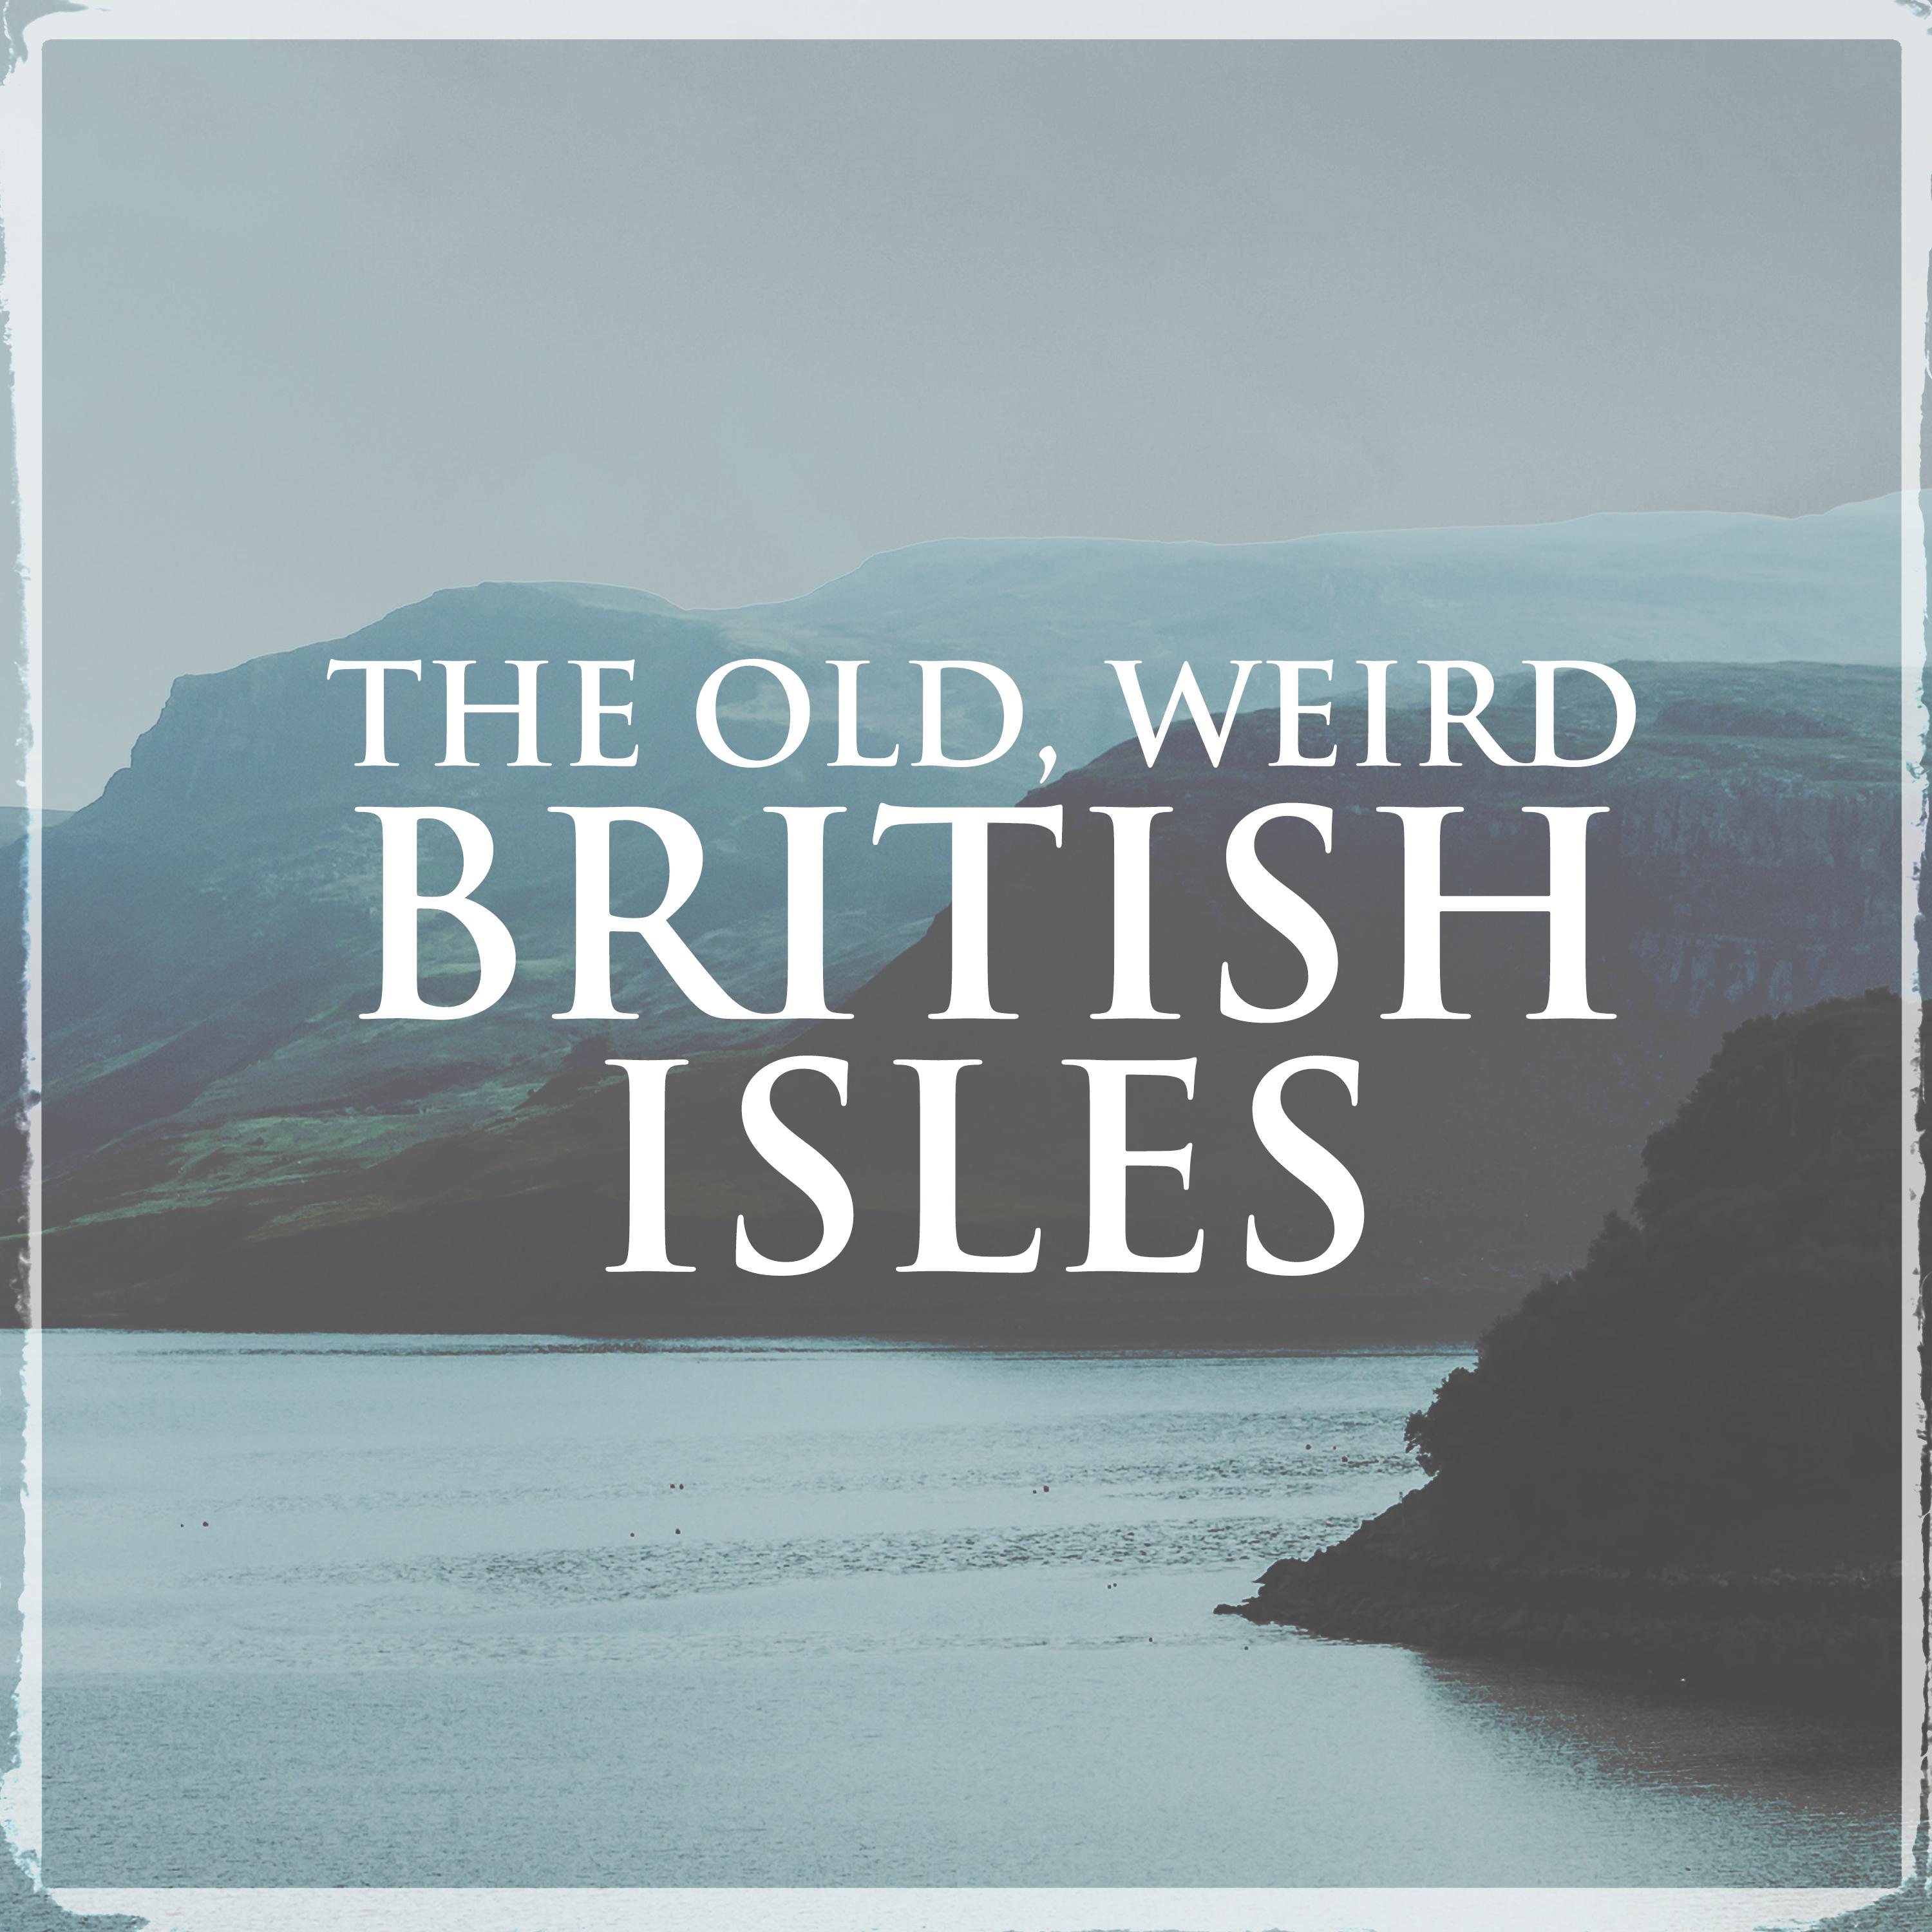 The Old, Weird British Isles